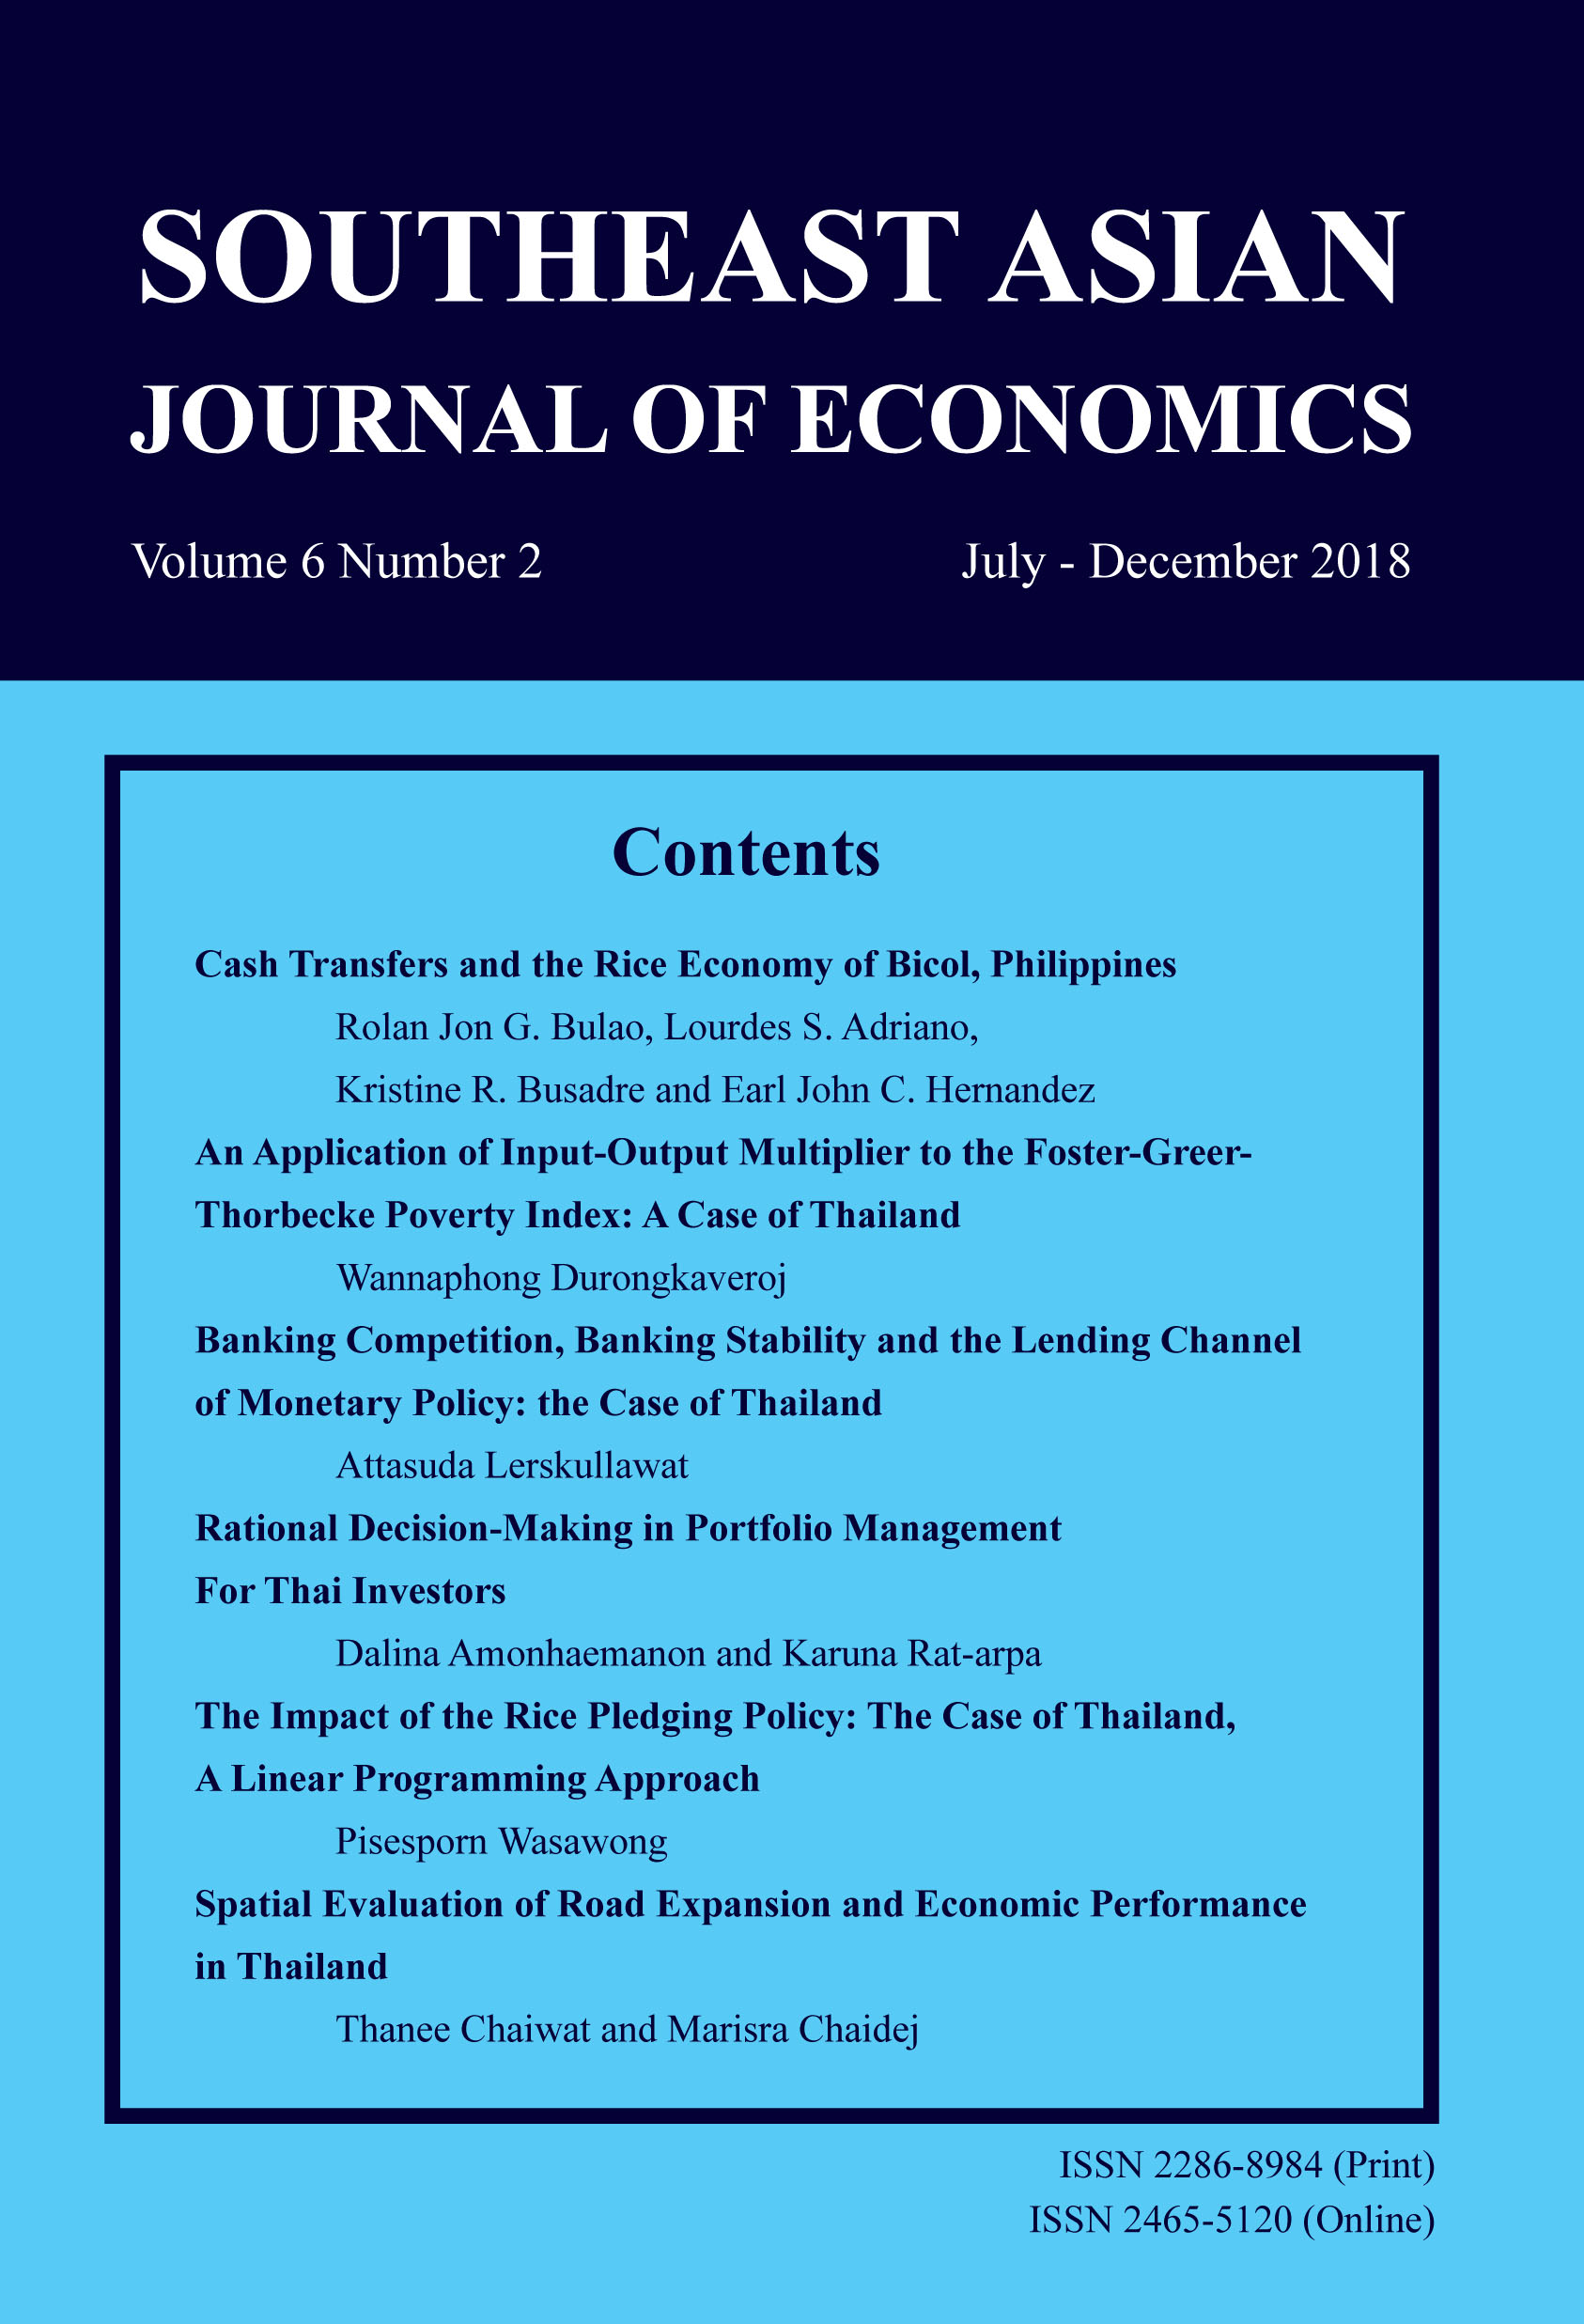 					View Southeast Asian Journal of Economics, Vol. 6 No. 2 (July - December 2018)
				